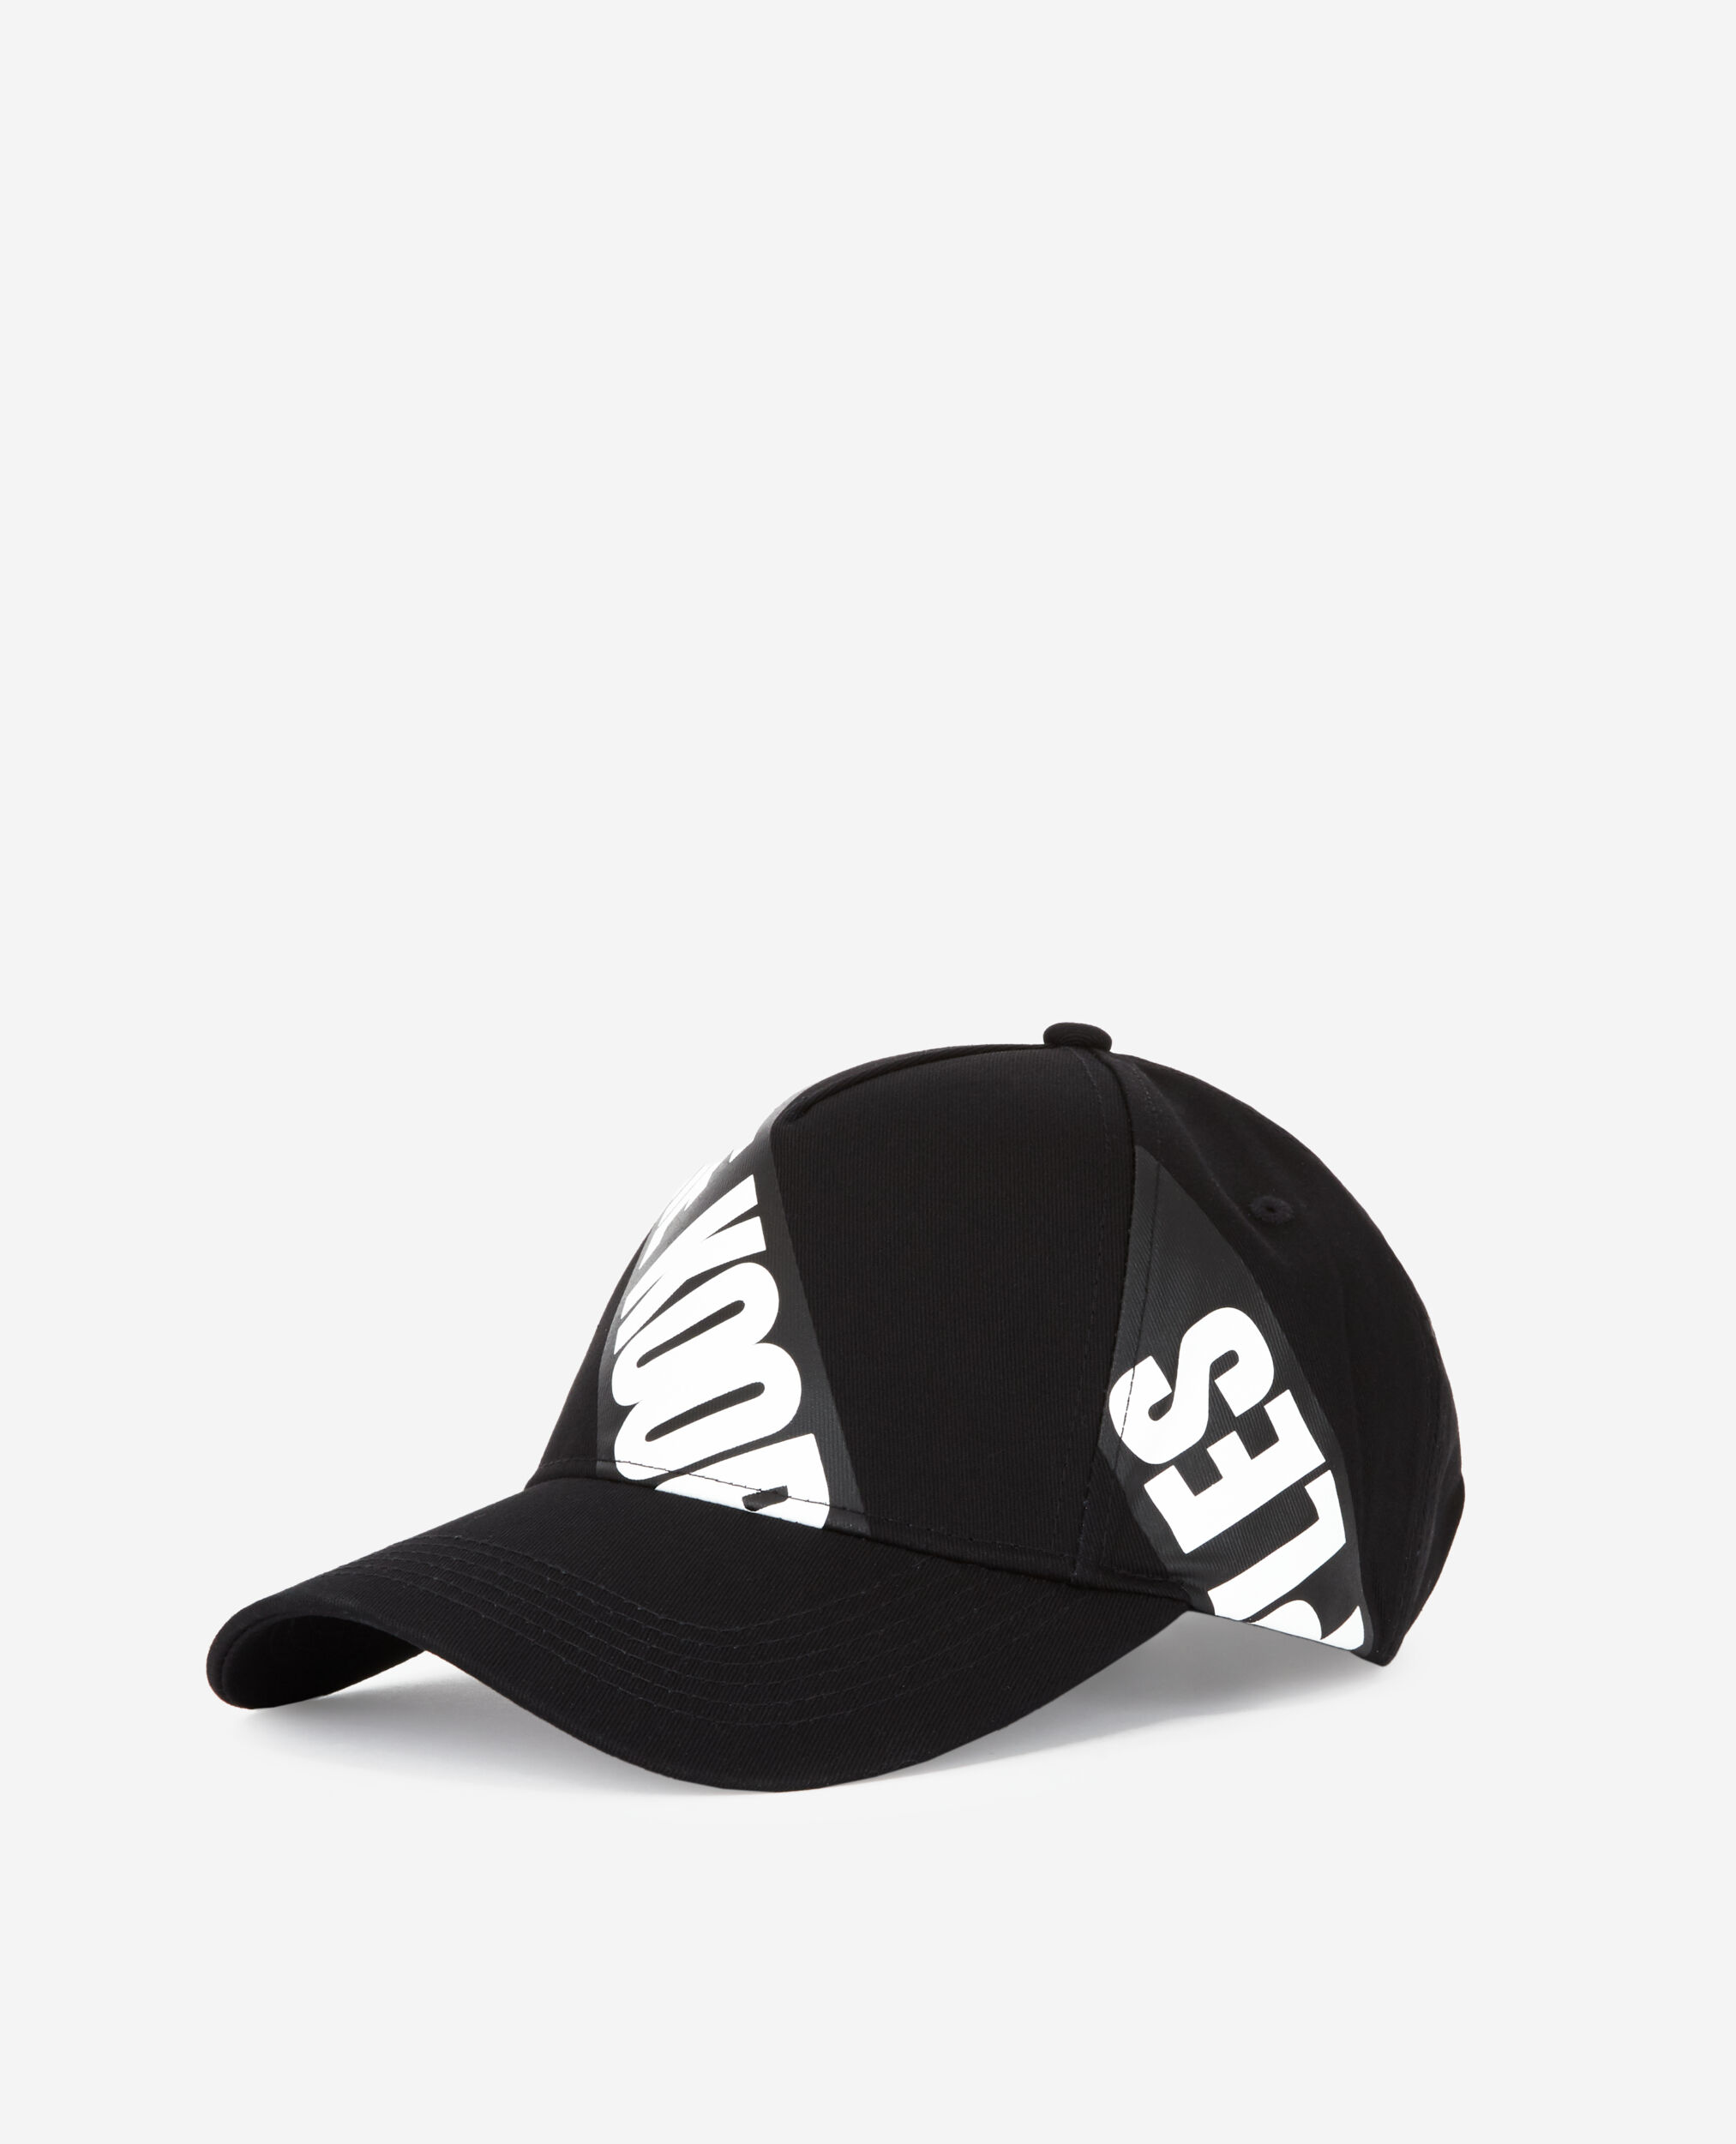 Black cap with Tape logo, BLACK, hi-res image number null